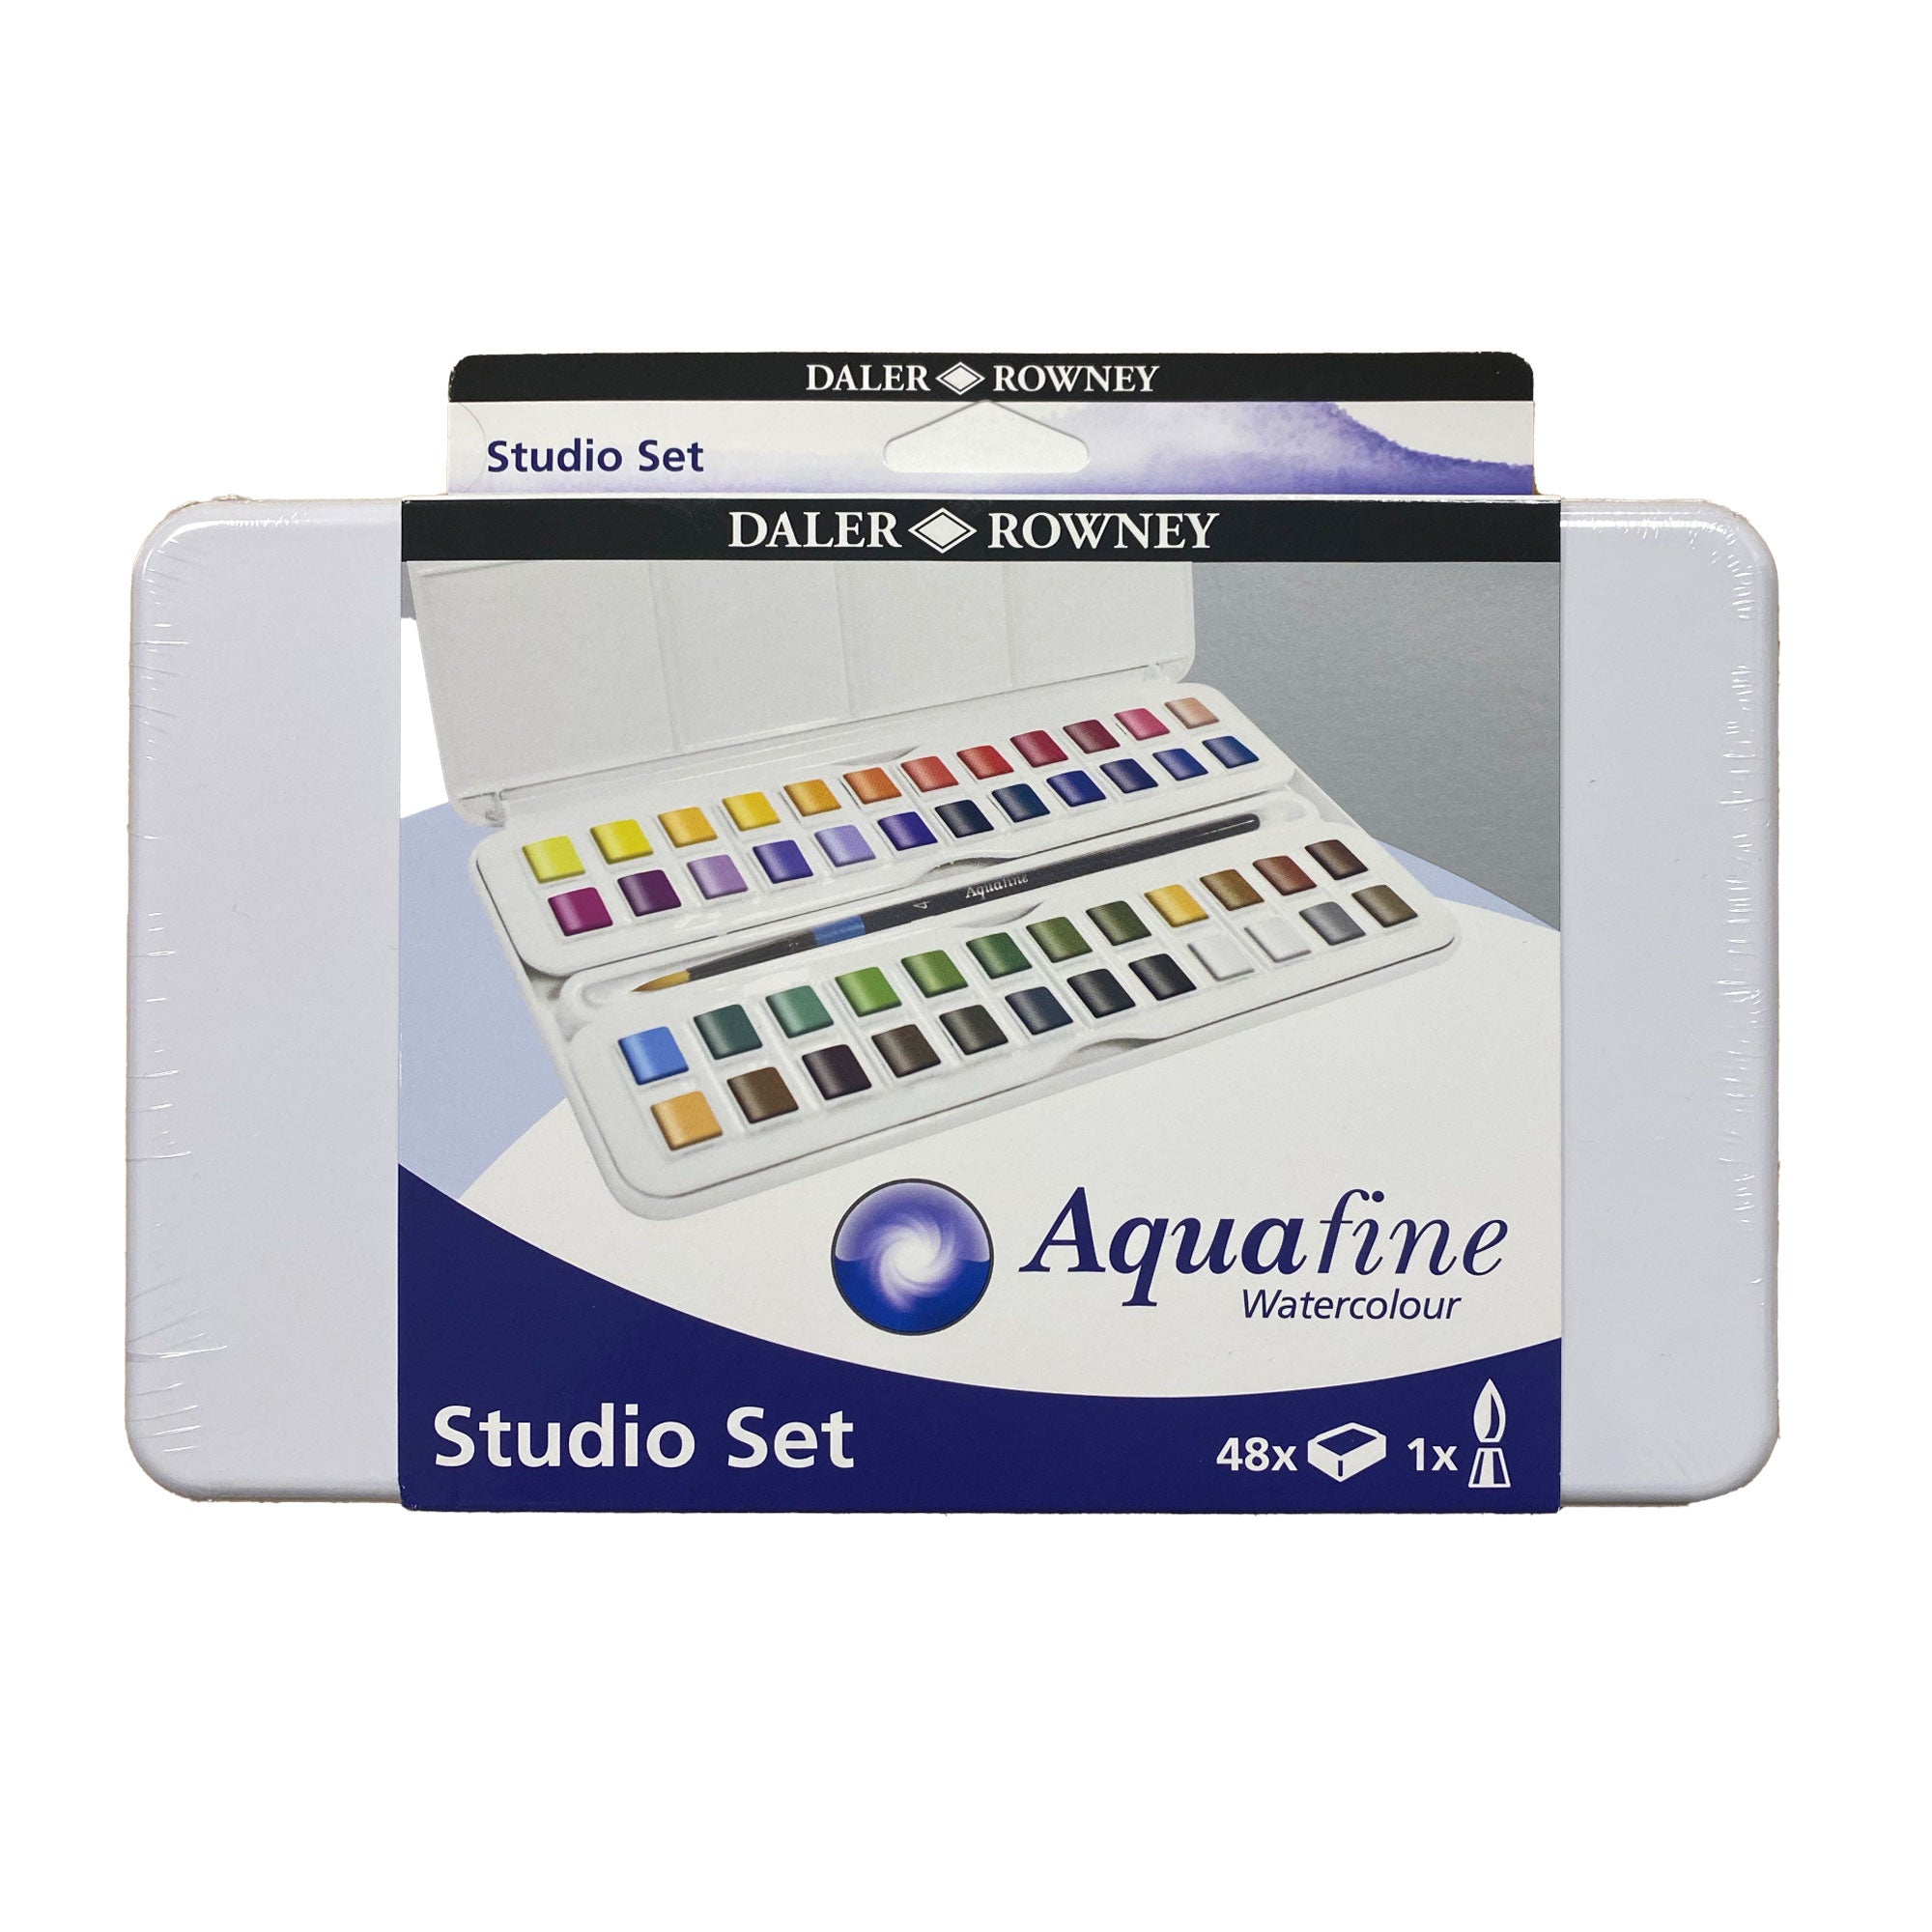 Daler-Rowney Aquafine Watercolour Studio Set